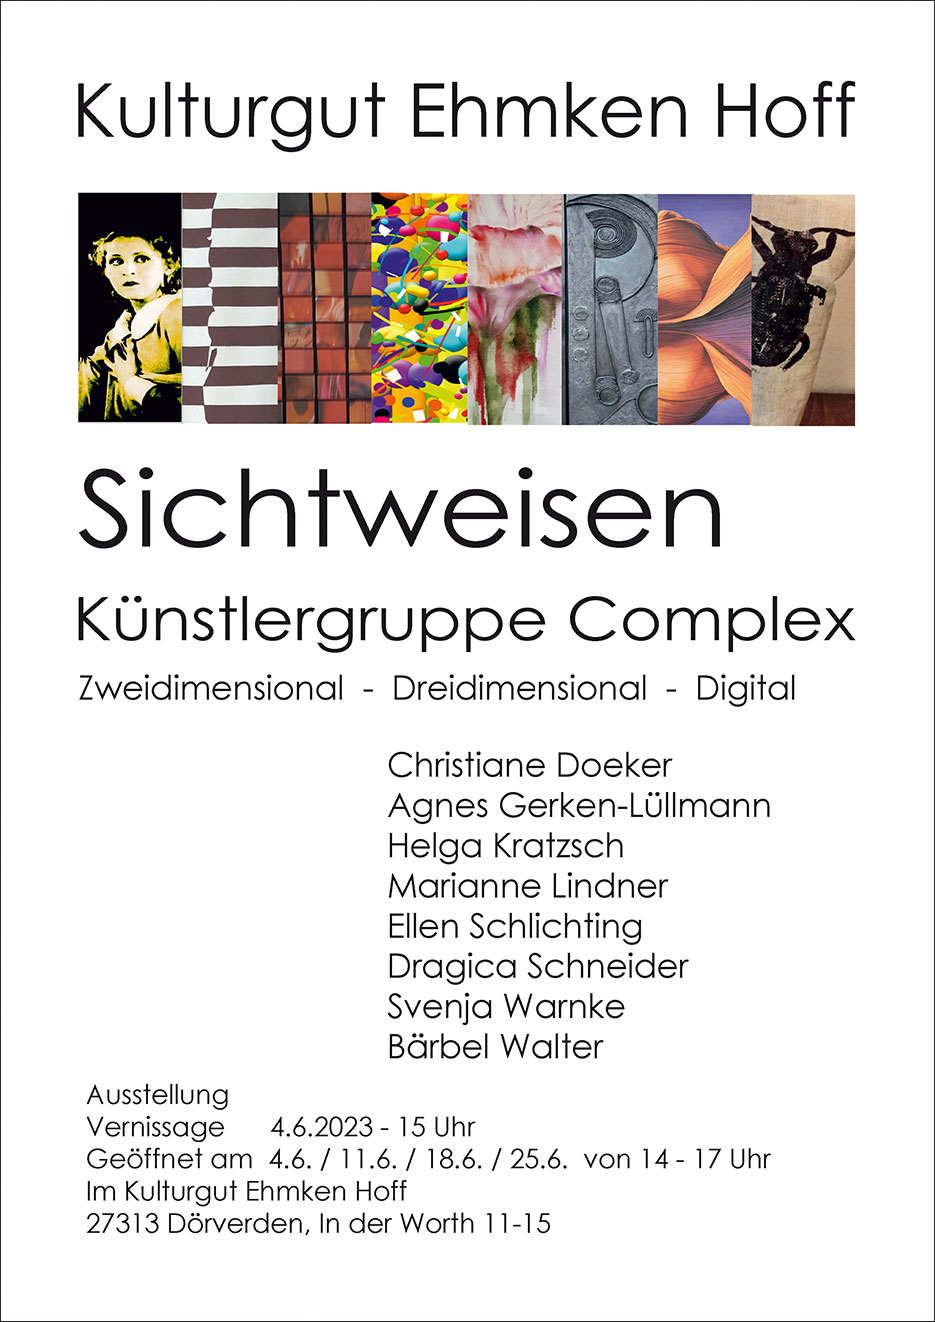 Ausstellung der Künstlergruppe Complex im Kulturgut Ehmken Hoff